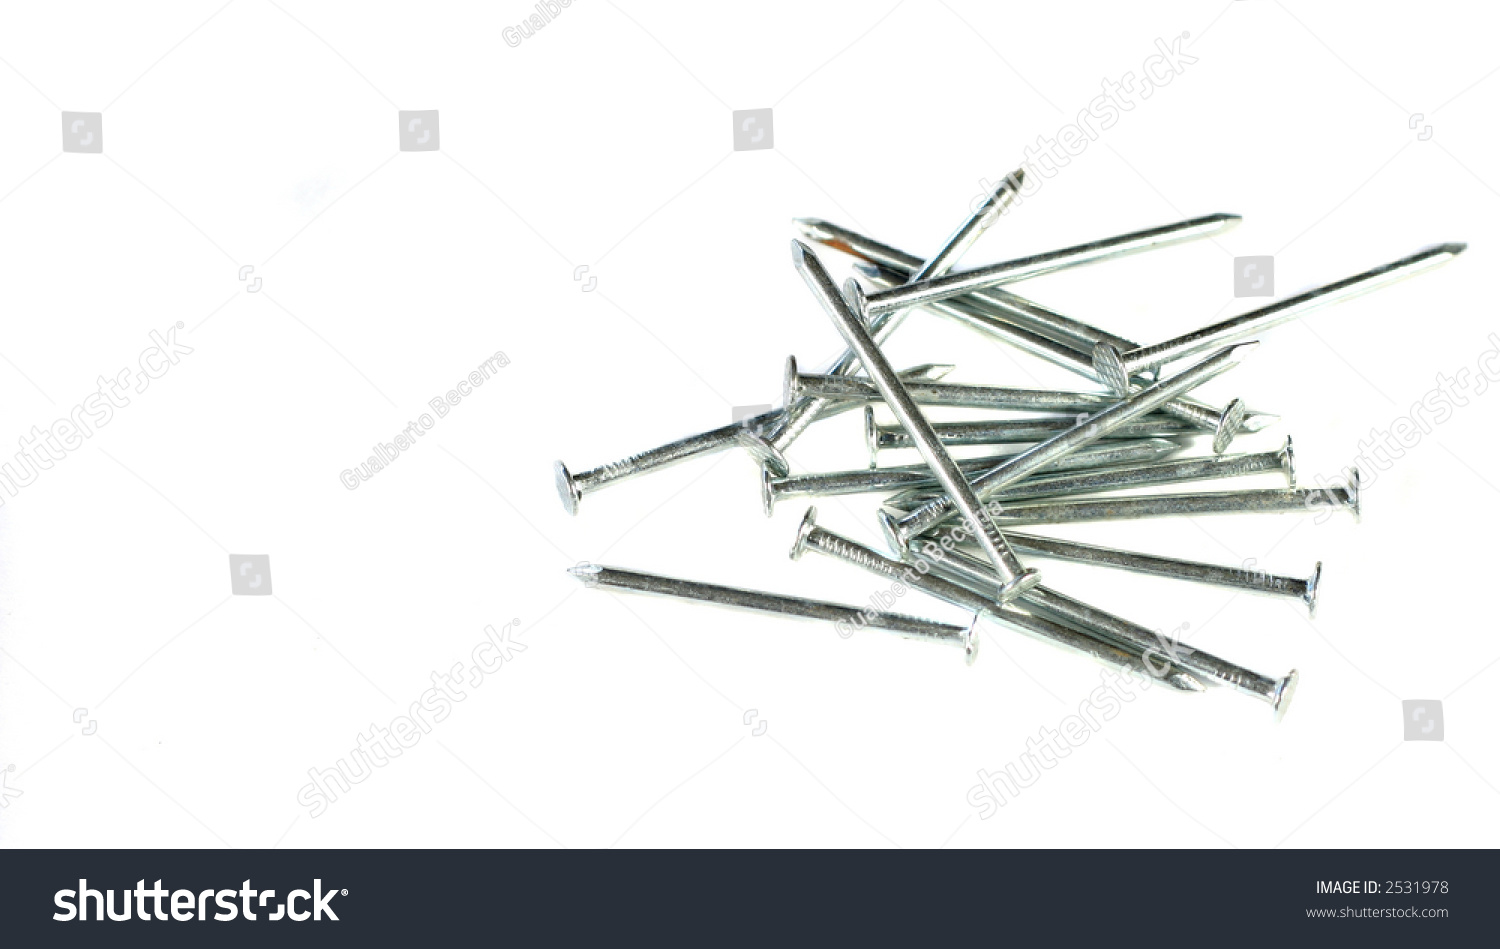 Nails Stock Photo 2531978 - Shutterstock